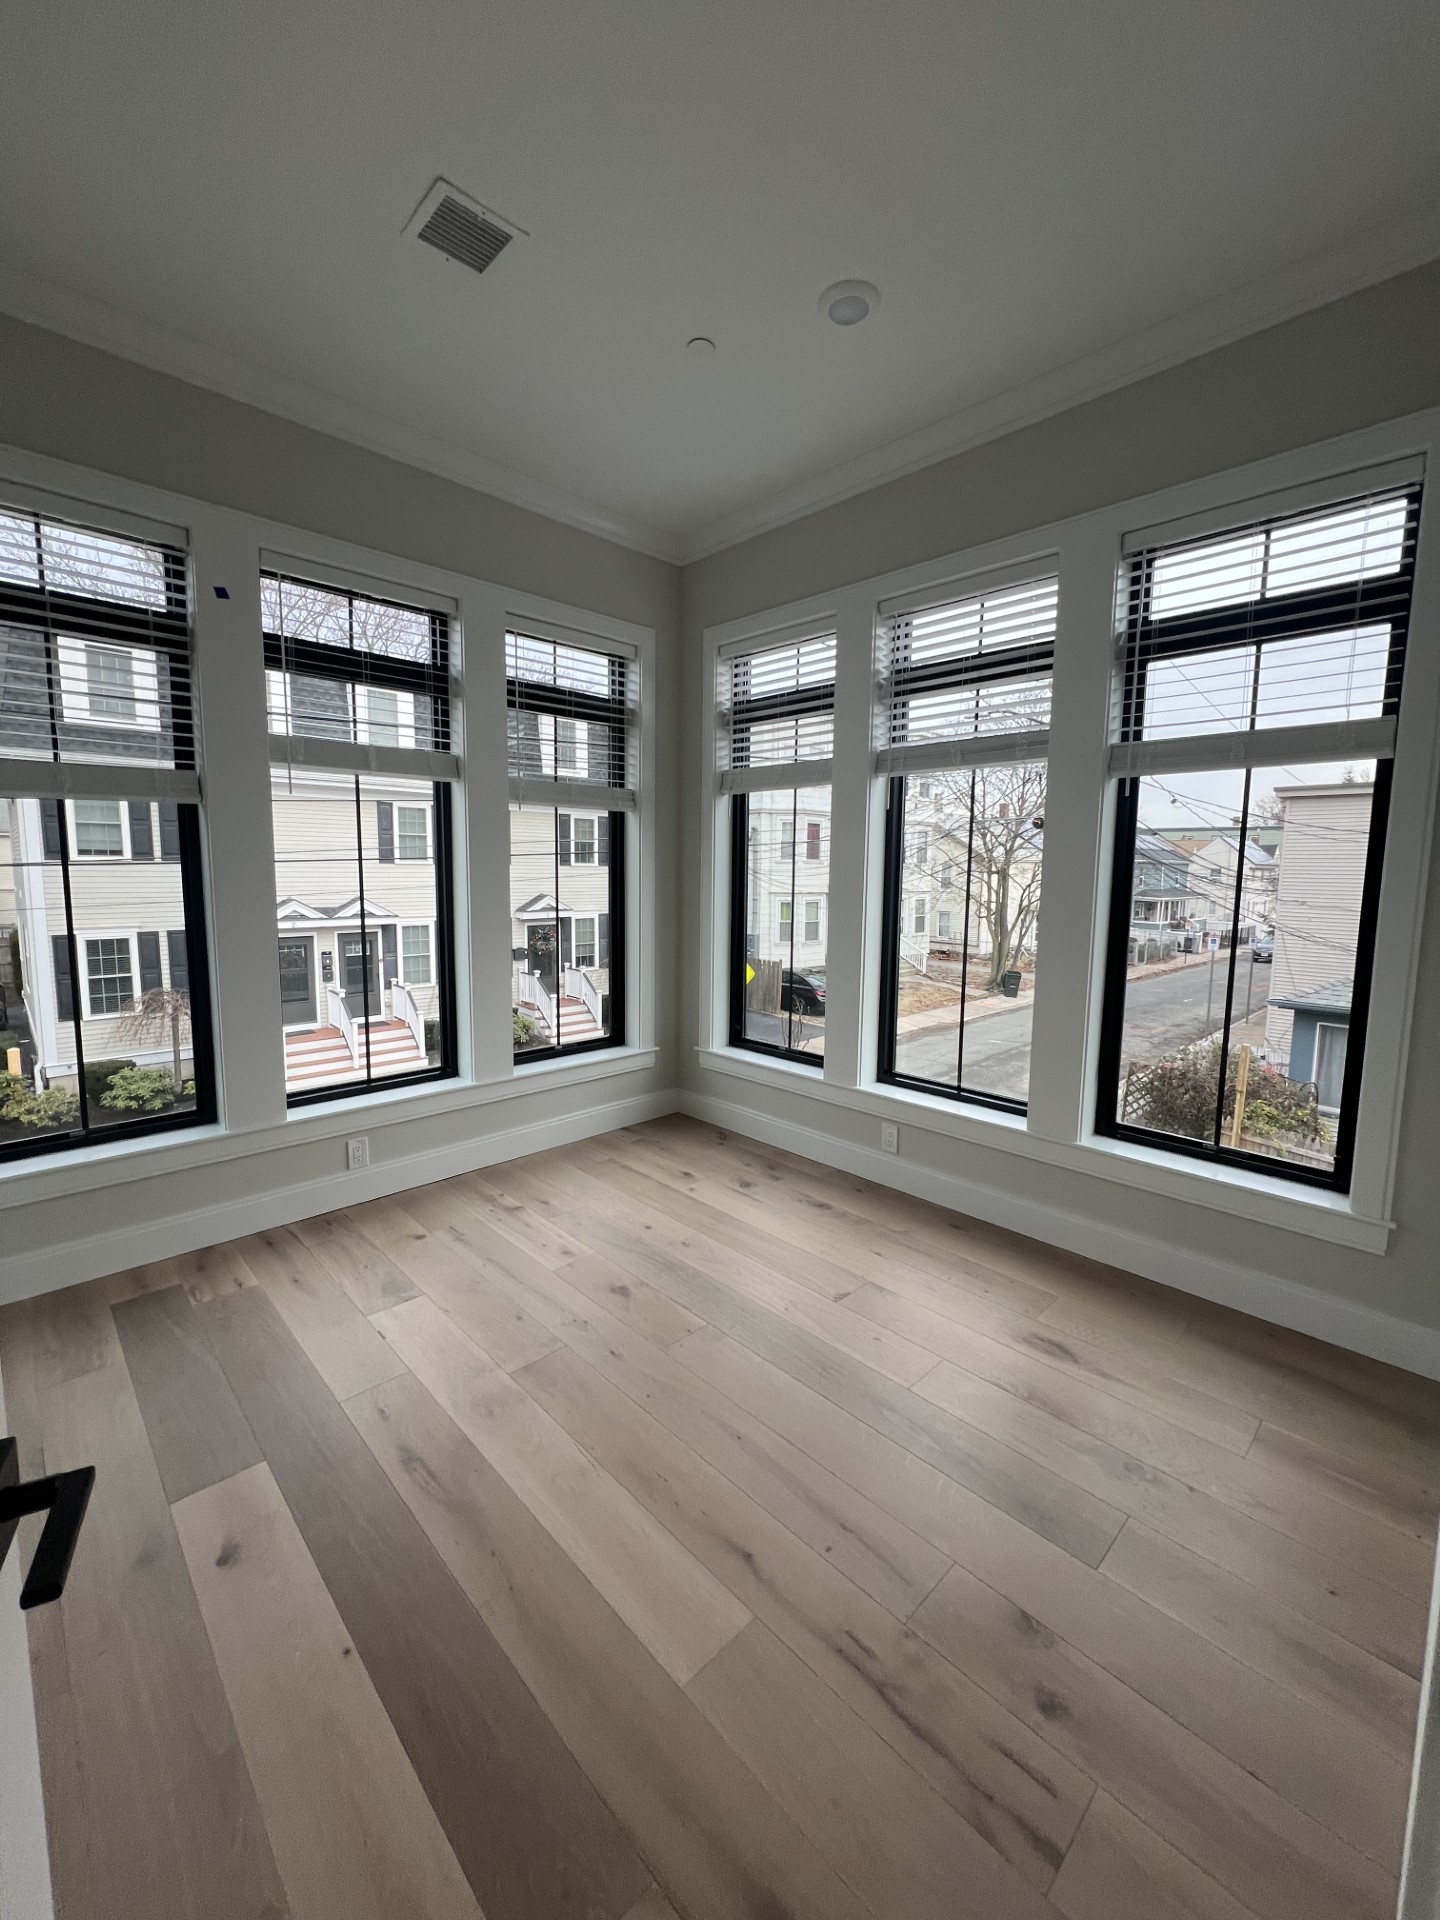 Photos of apartment on Everett St.,Boston MA 02134